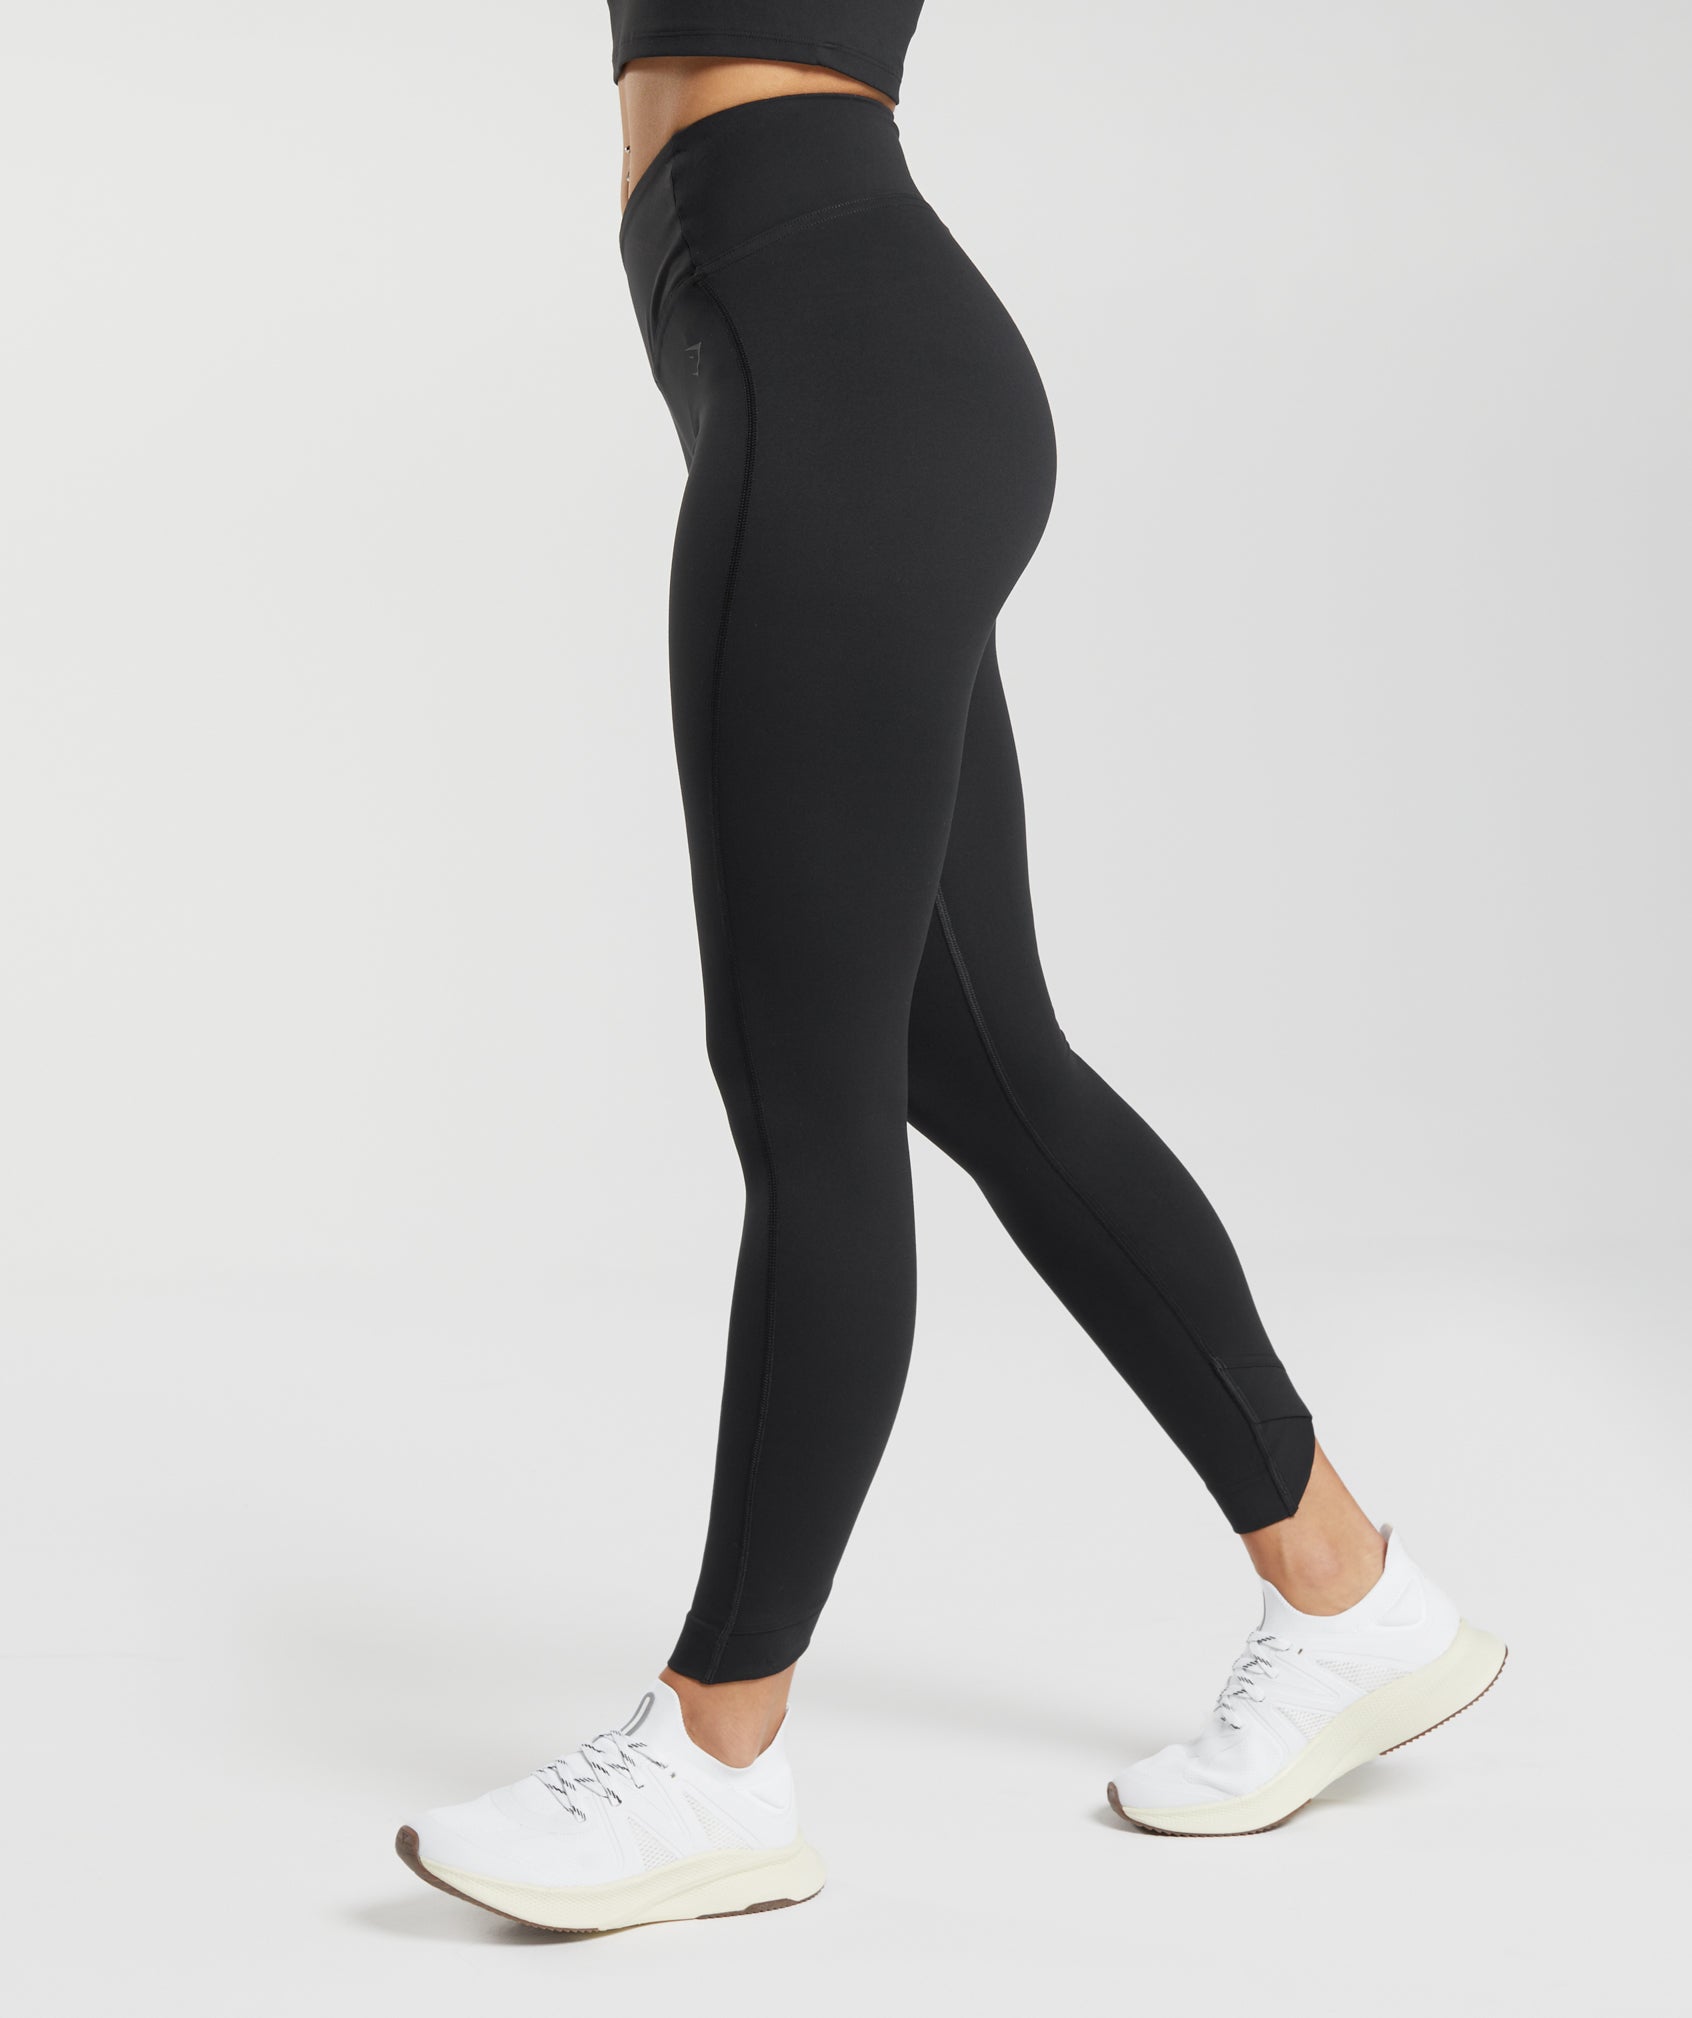 Alexvyan Black Skinny & Slim Fit Gym Wear Yoga Pants Ankle Length Leggings  Workout Active wear | Stretchable Workout Tights | High Waist Sports  Fitness for Girls & Women- Nylon Fiber &